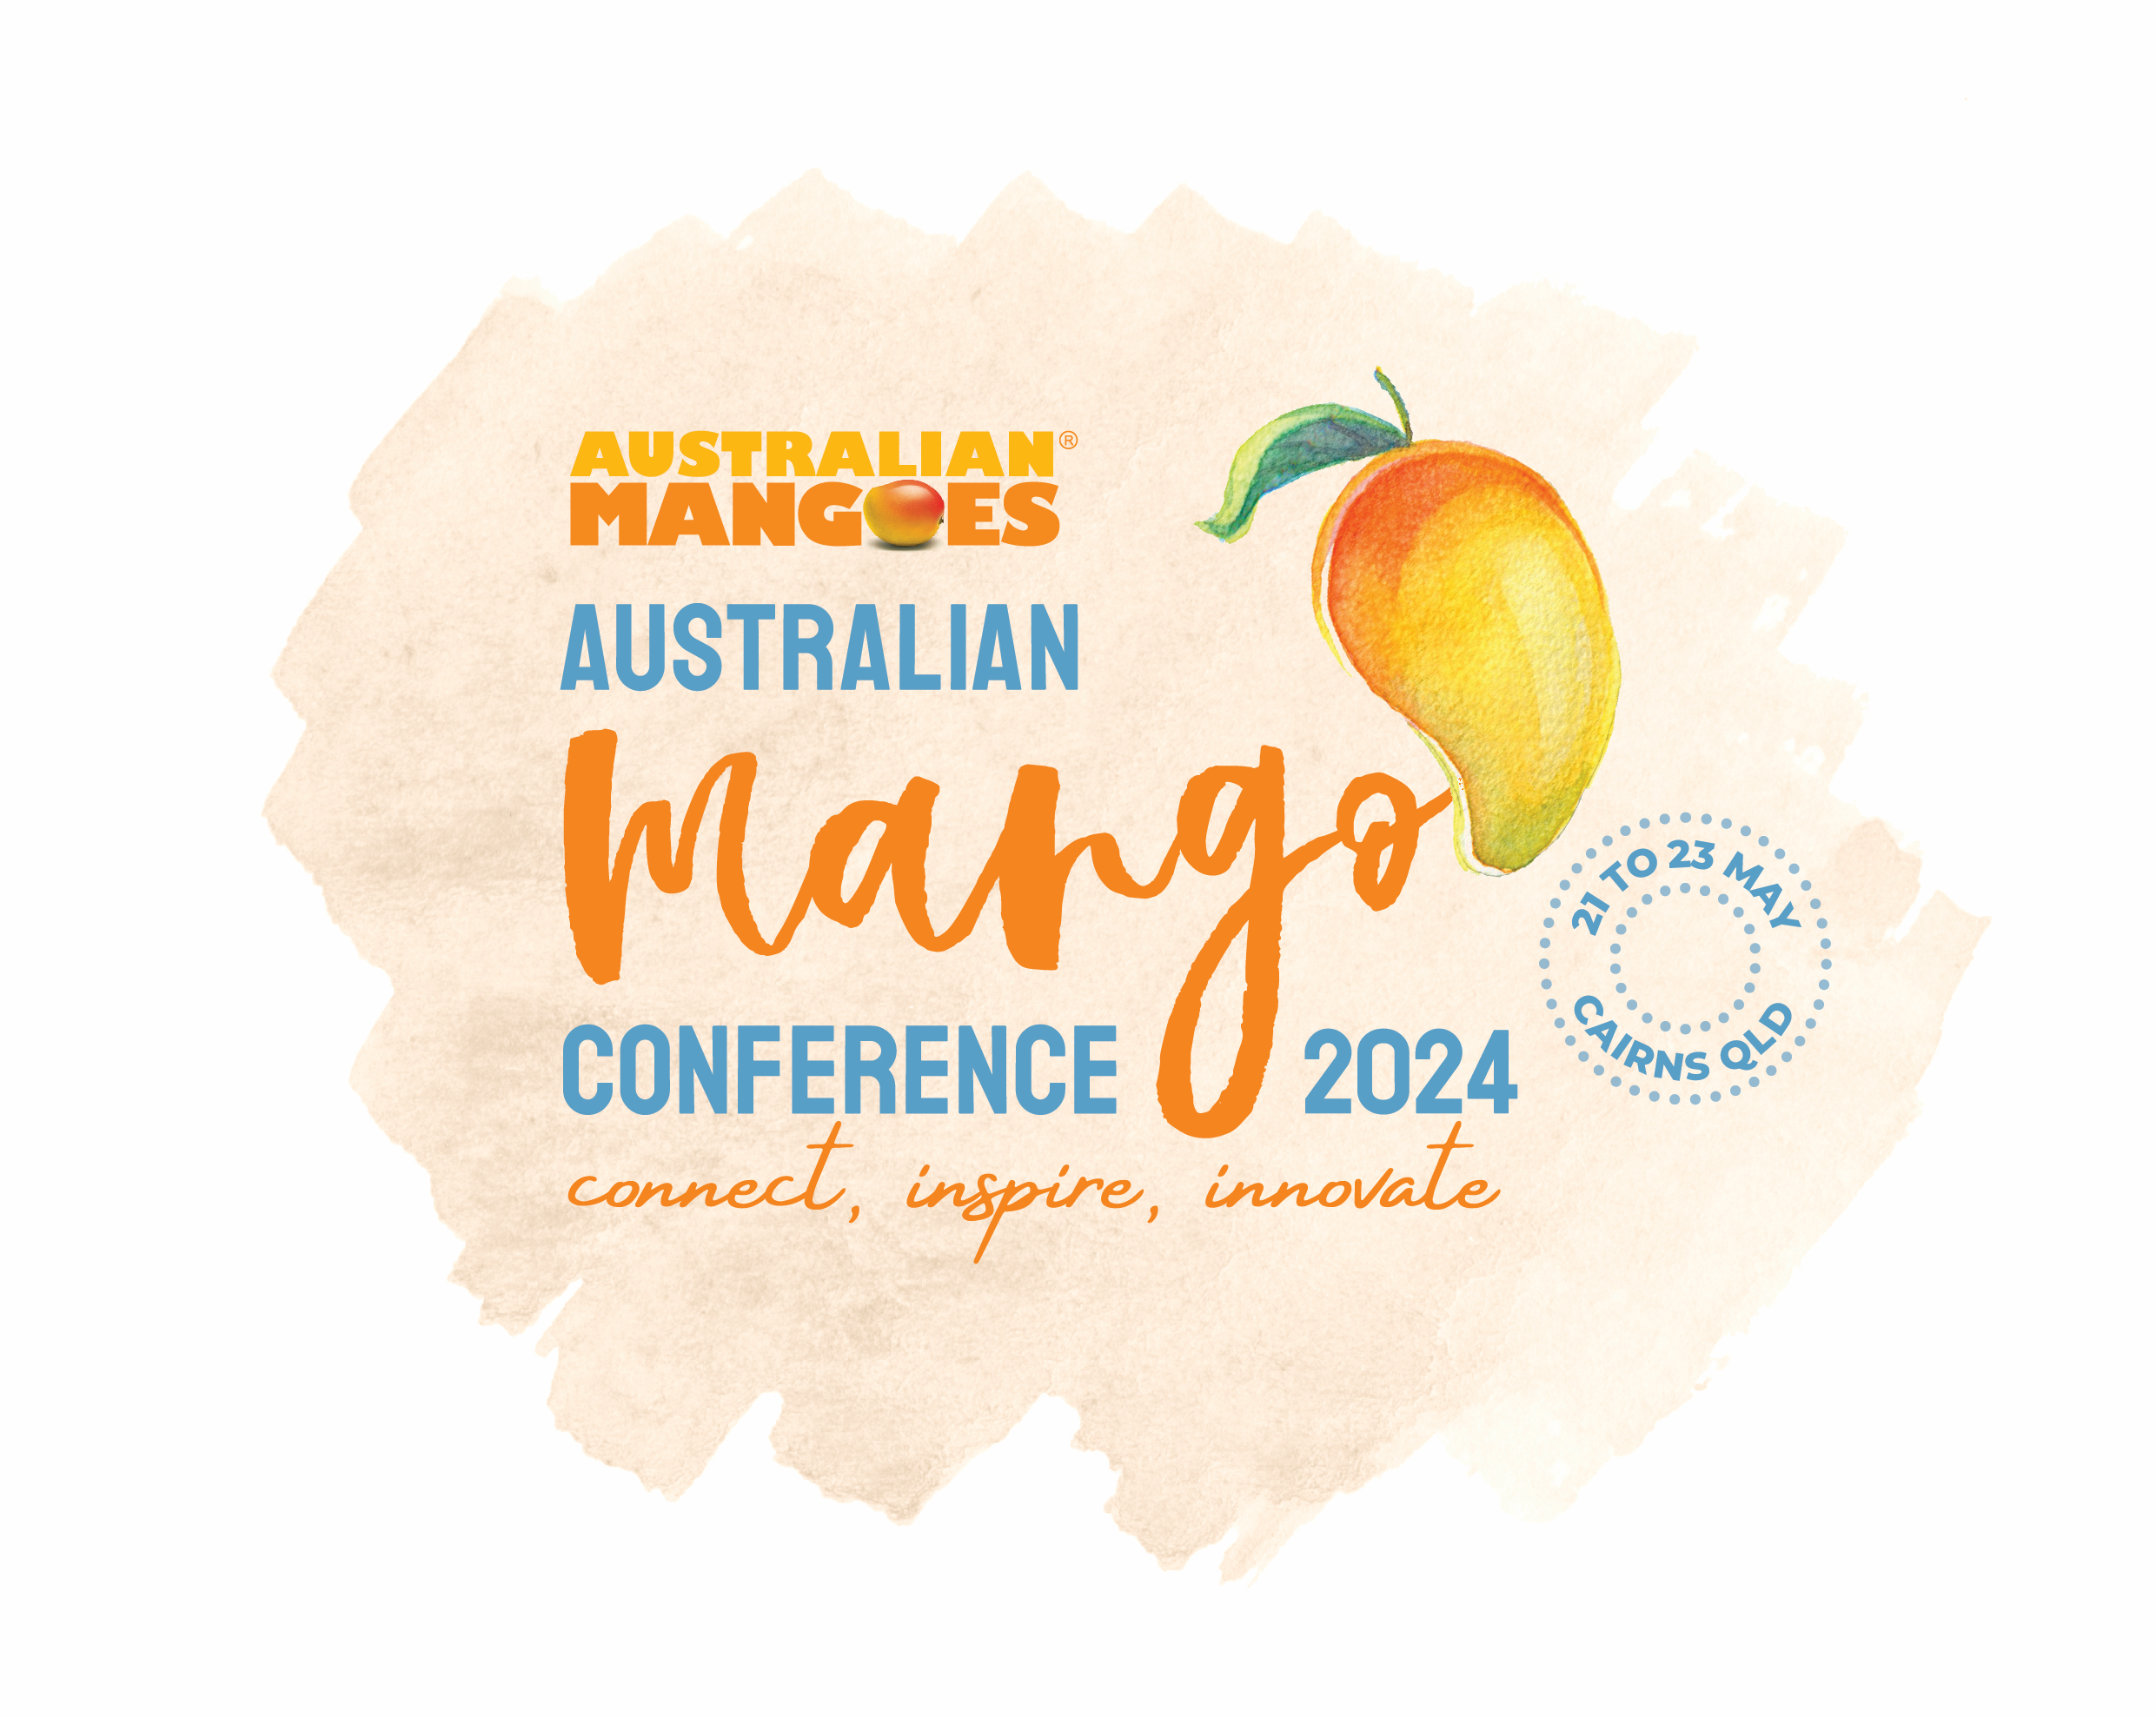 Mango Conference 2024